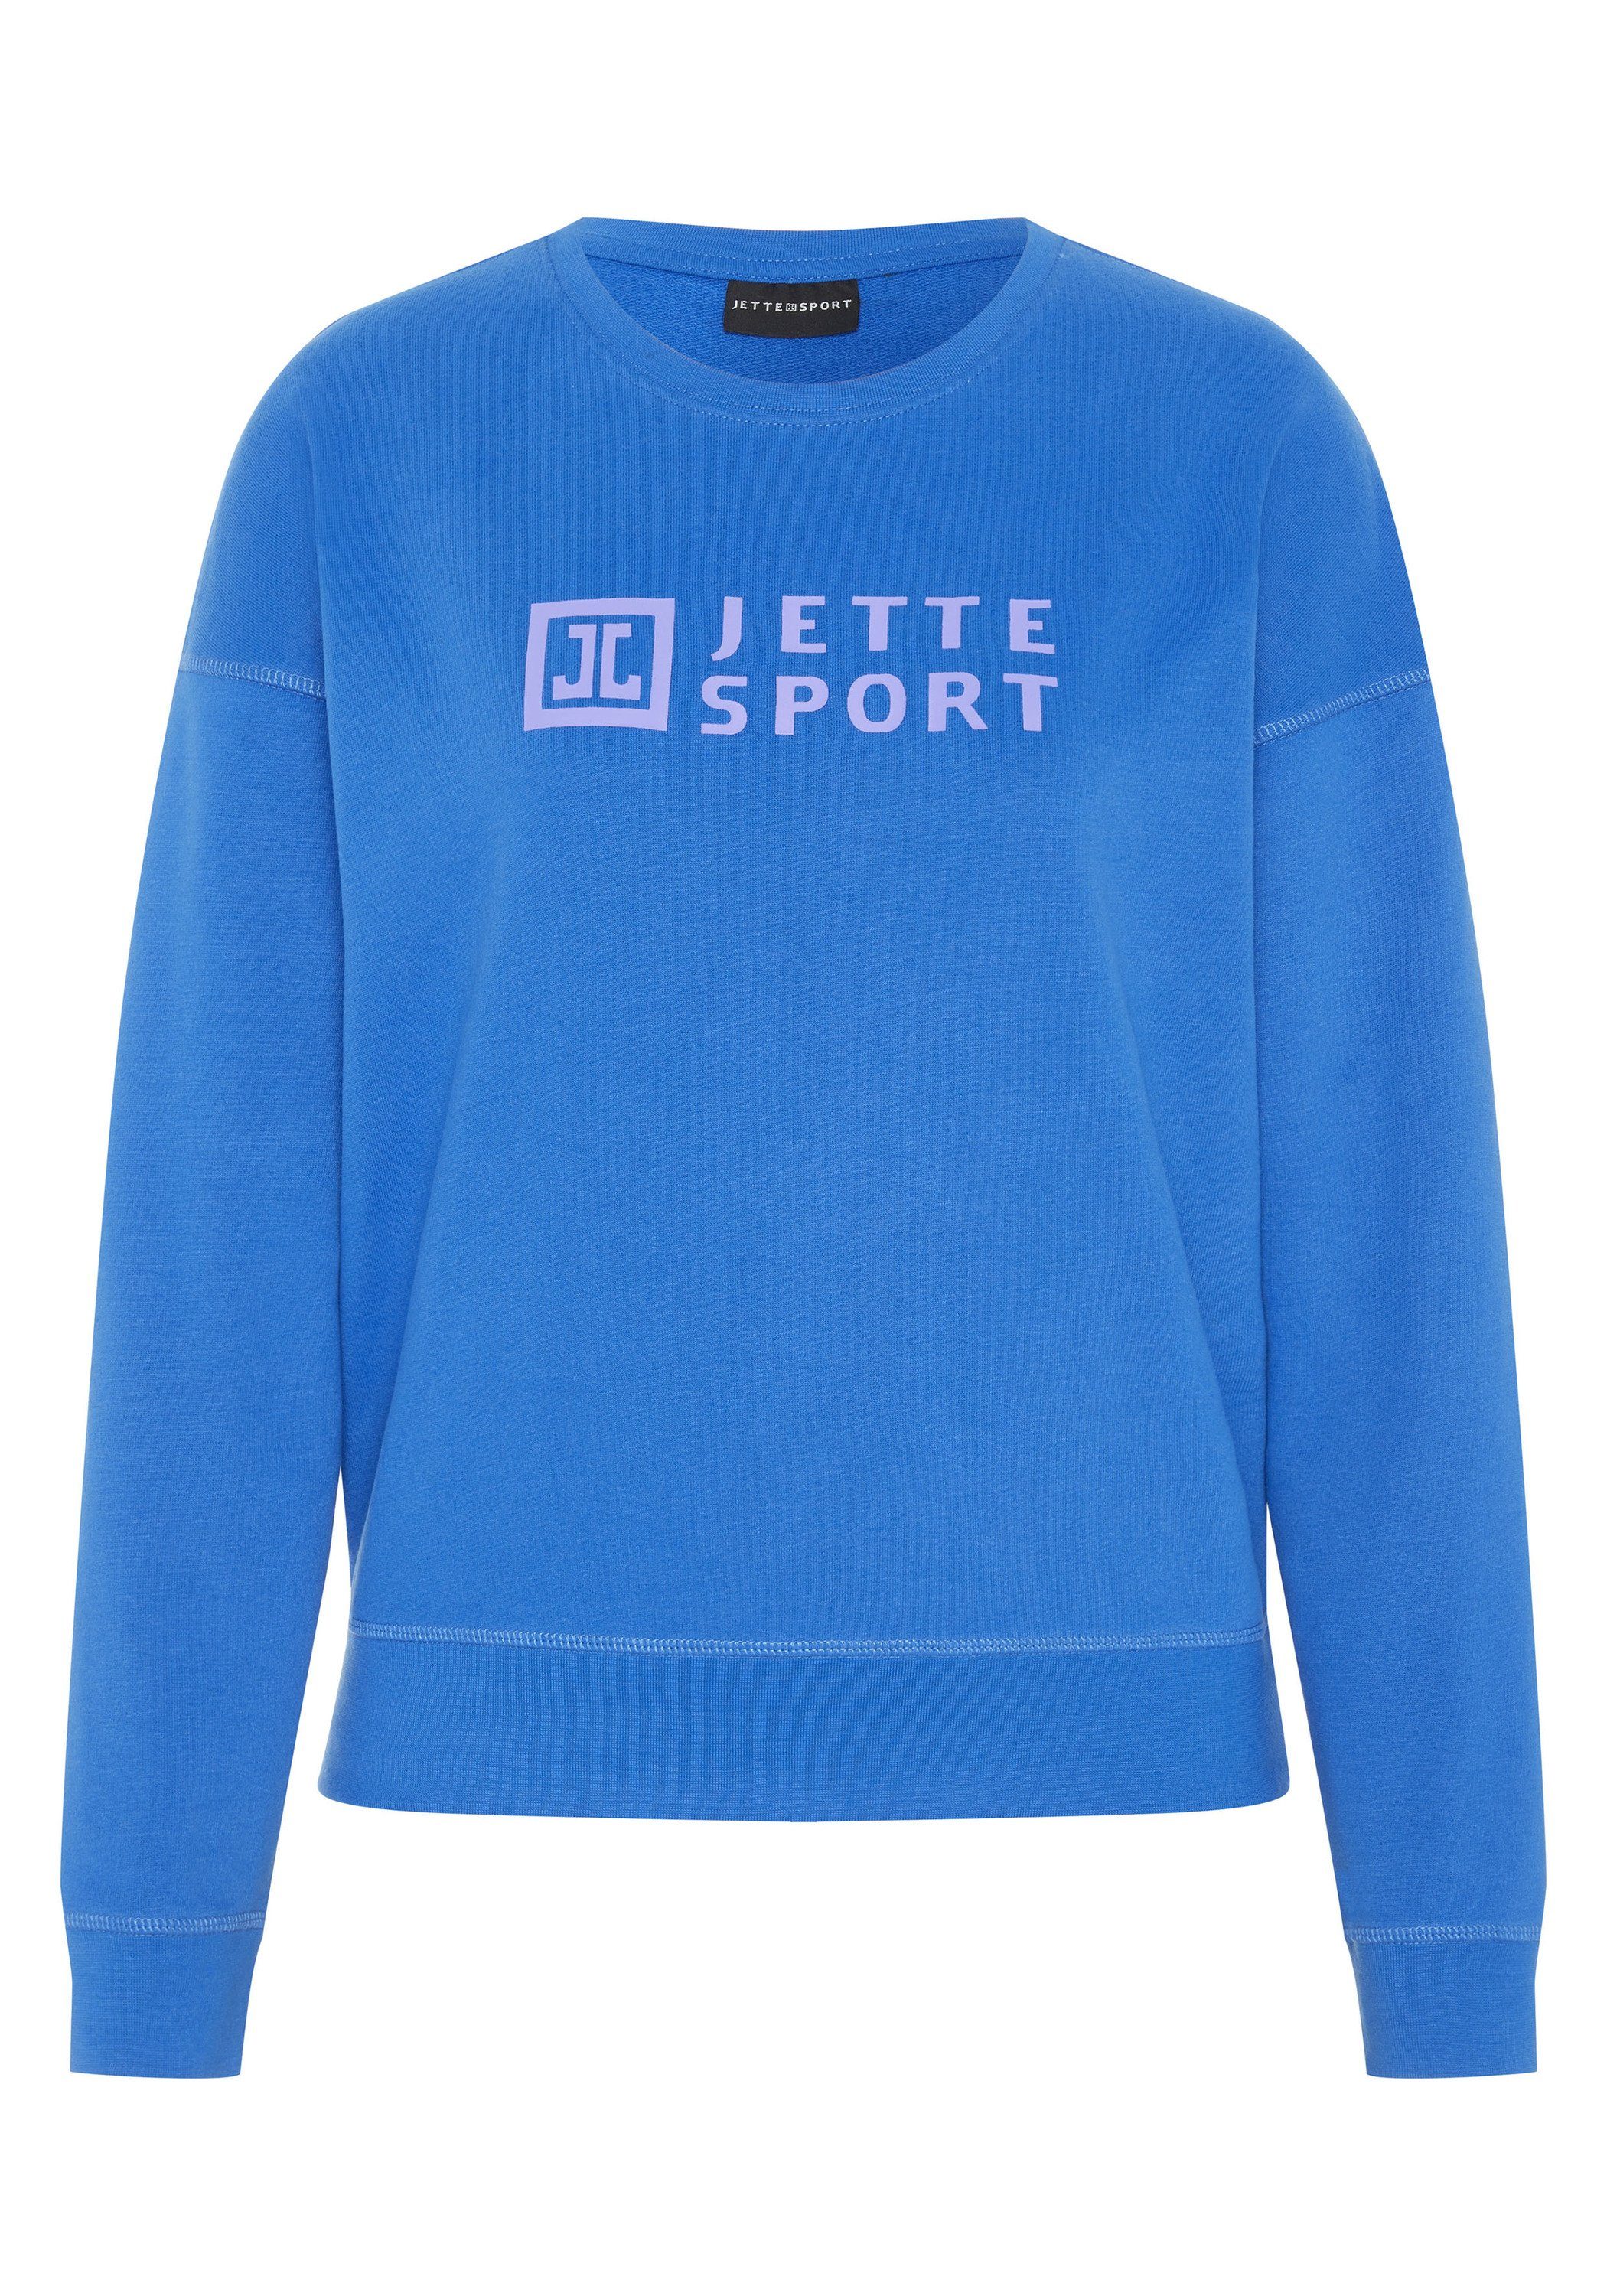 SPORT Damen-Sweater Label-Pigment-Print Label-Design, JETTE SPORT JETTE im Sweatshirt mit